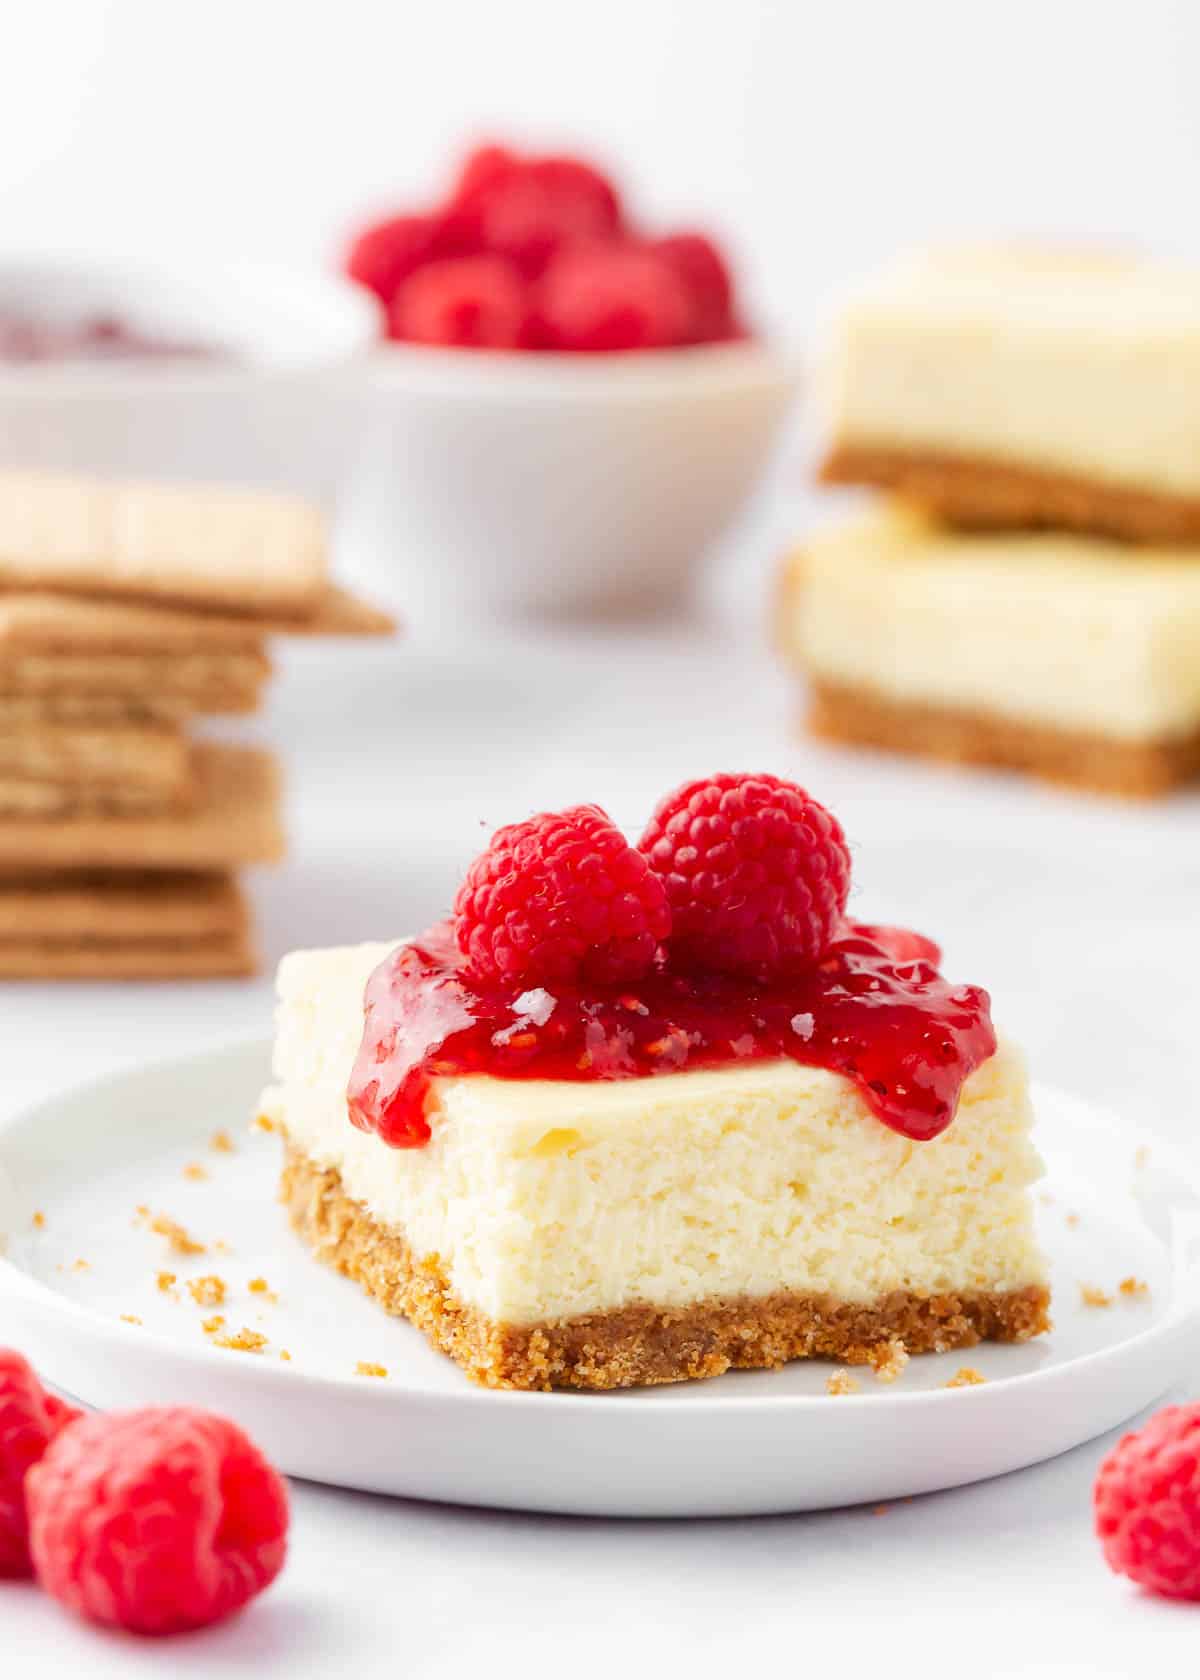 Cheesecake bars with fresh raspberries on top.